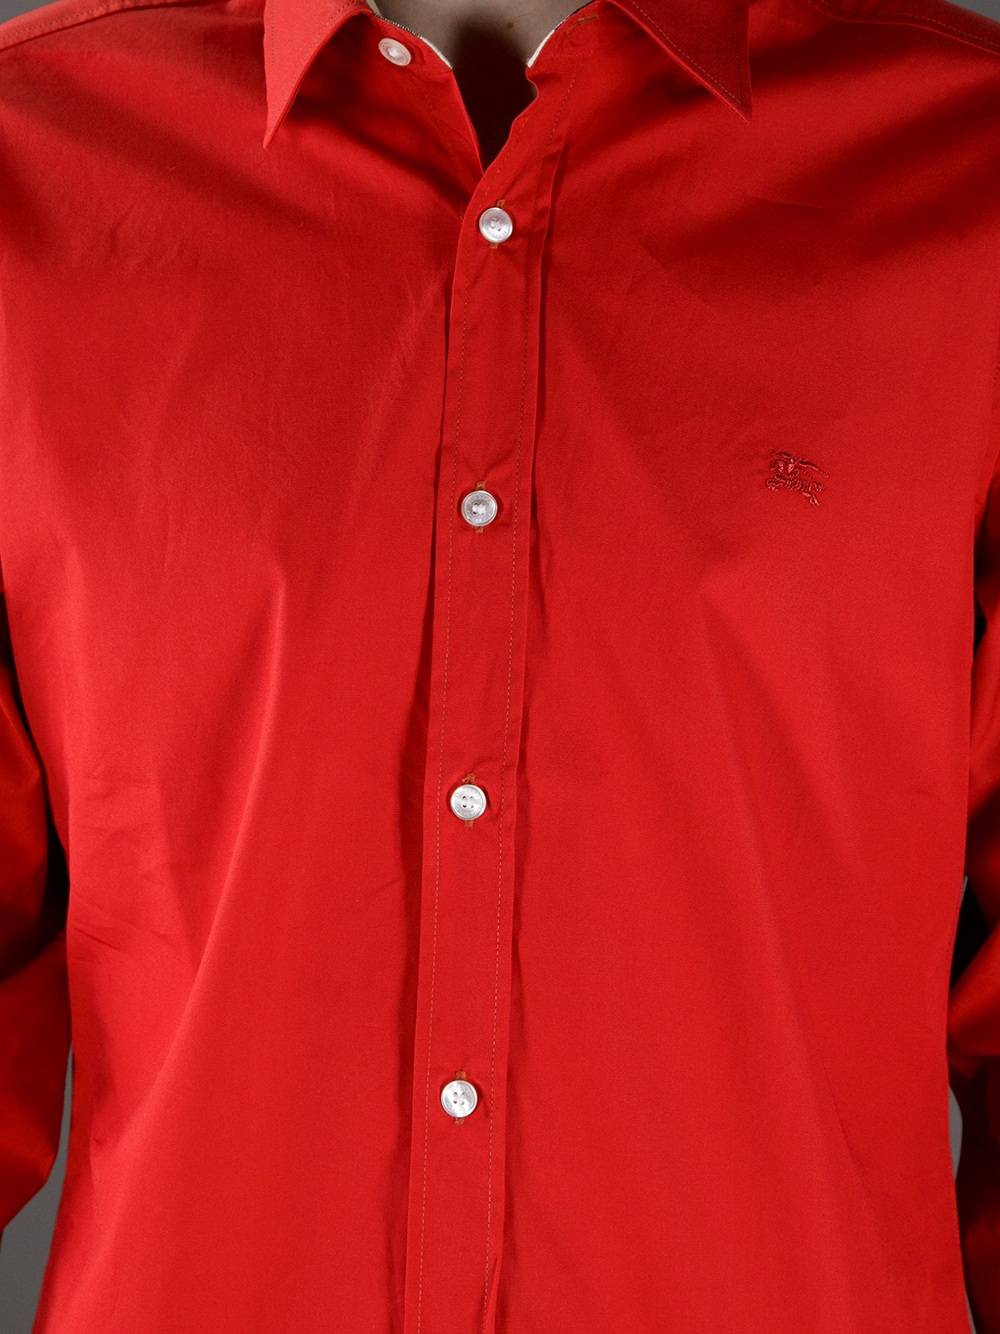 burberry brit red shirt